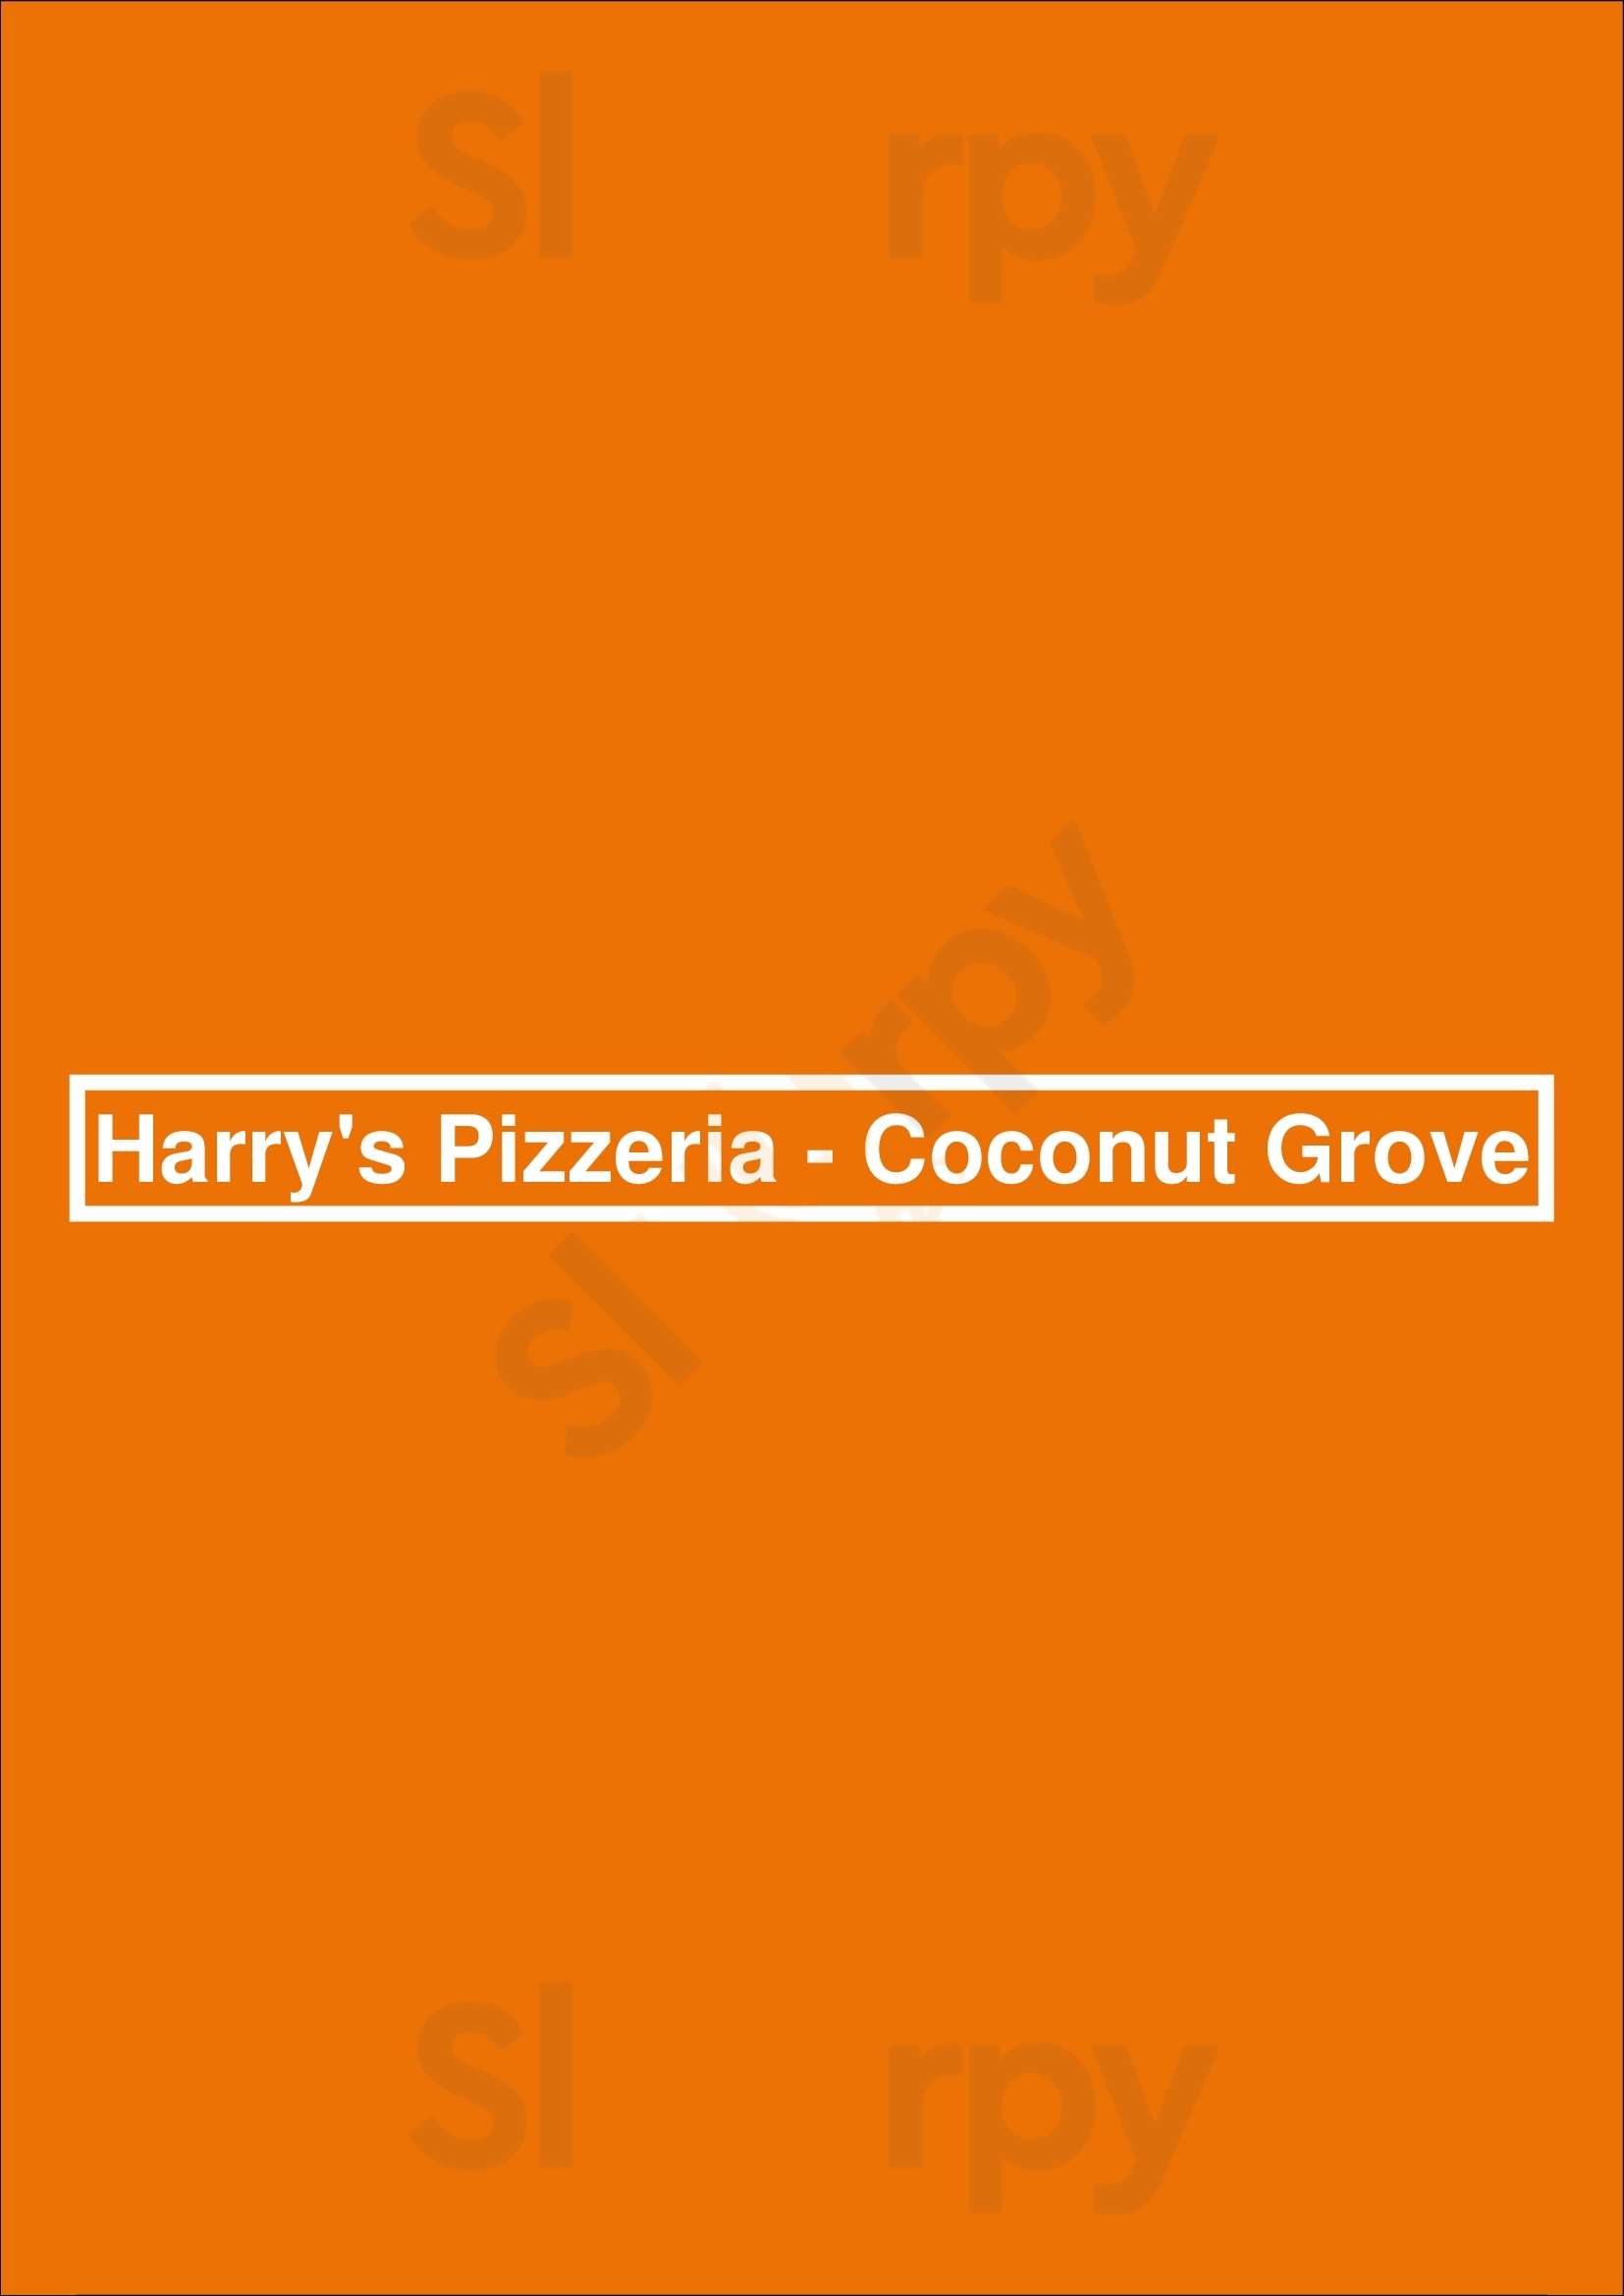 Harry's Pizzeria - Coconut Grove Miami Menu - 1